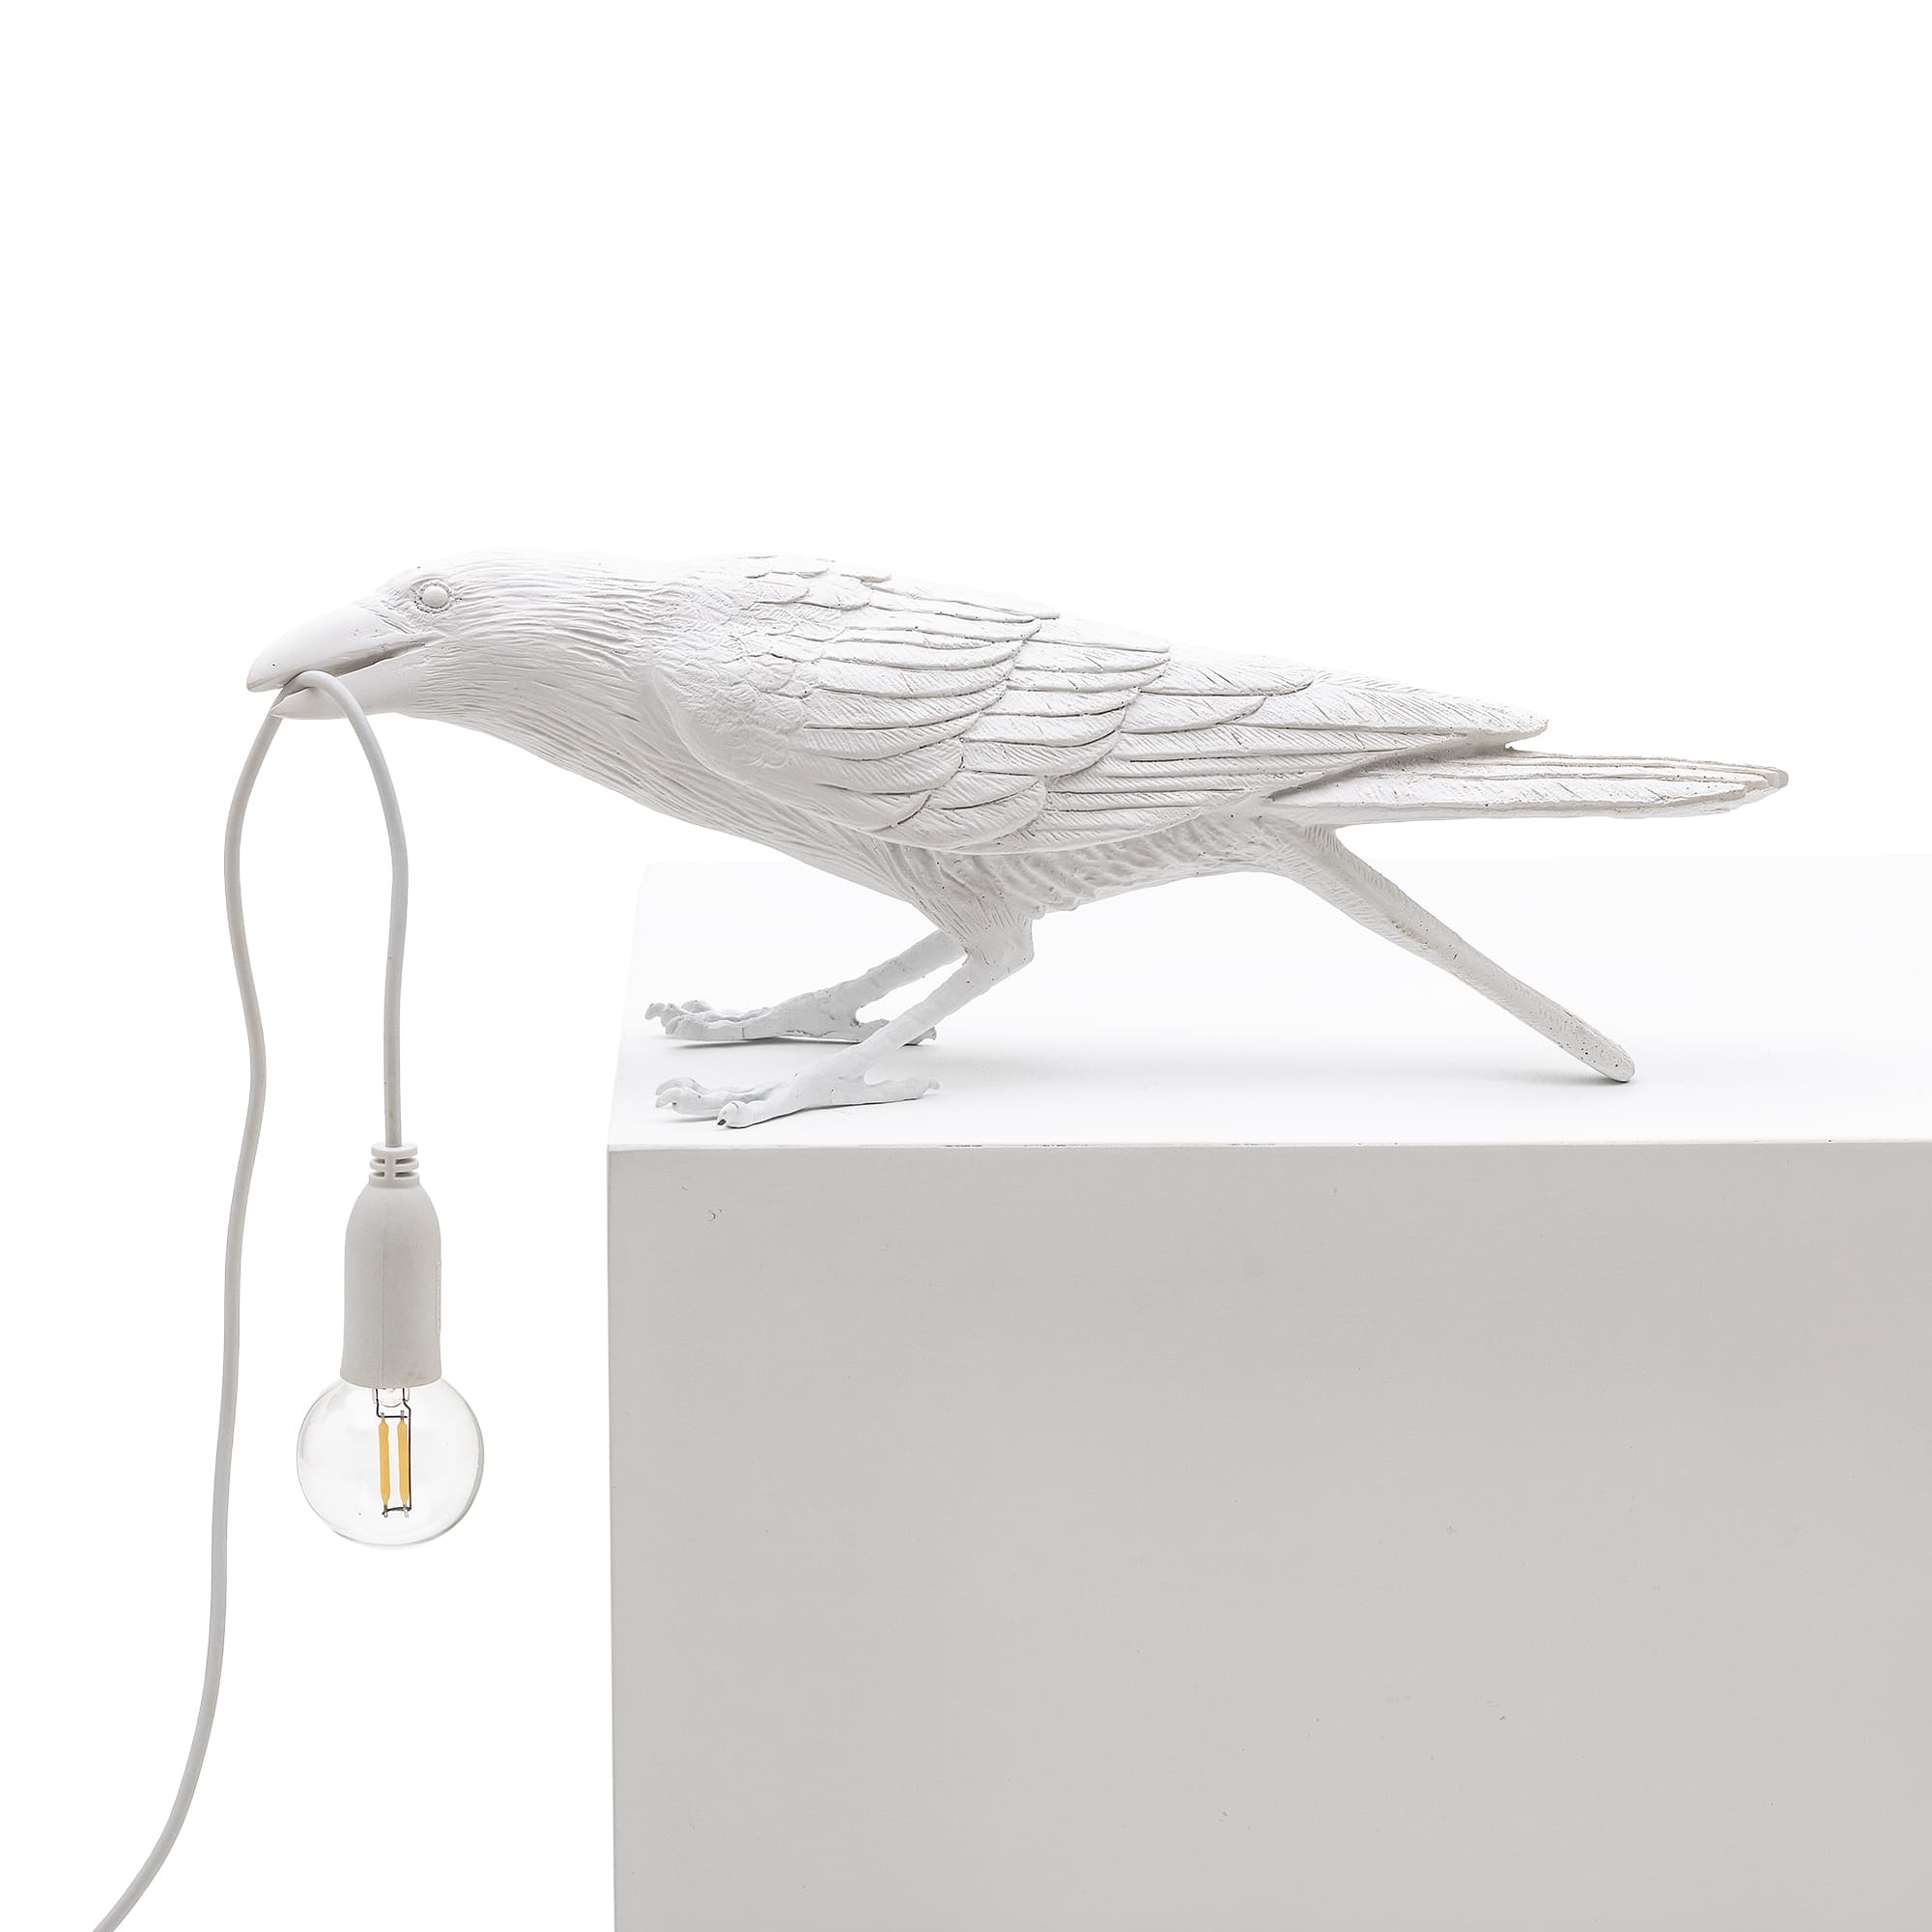 Seletti - Bird Lamp White Playing